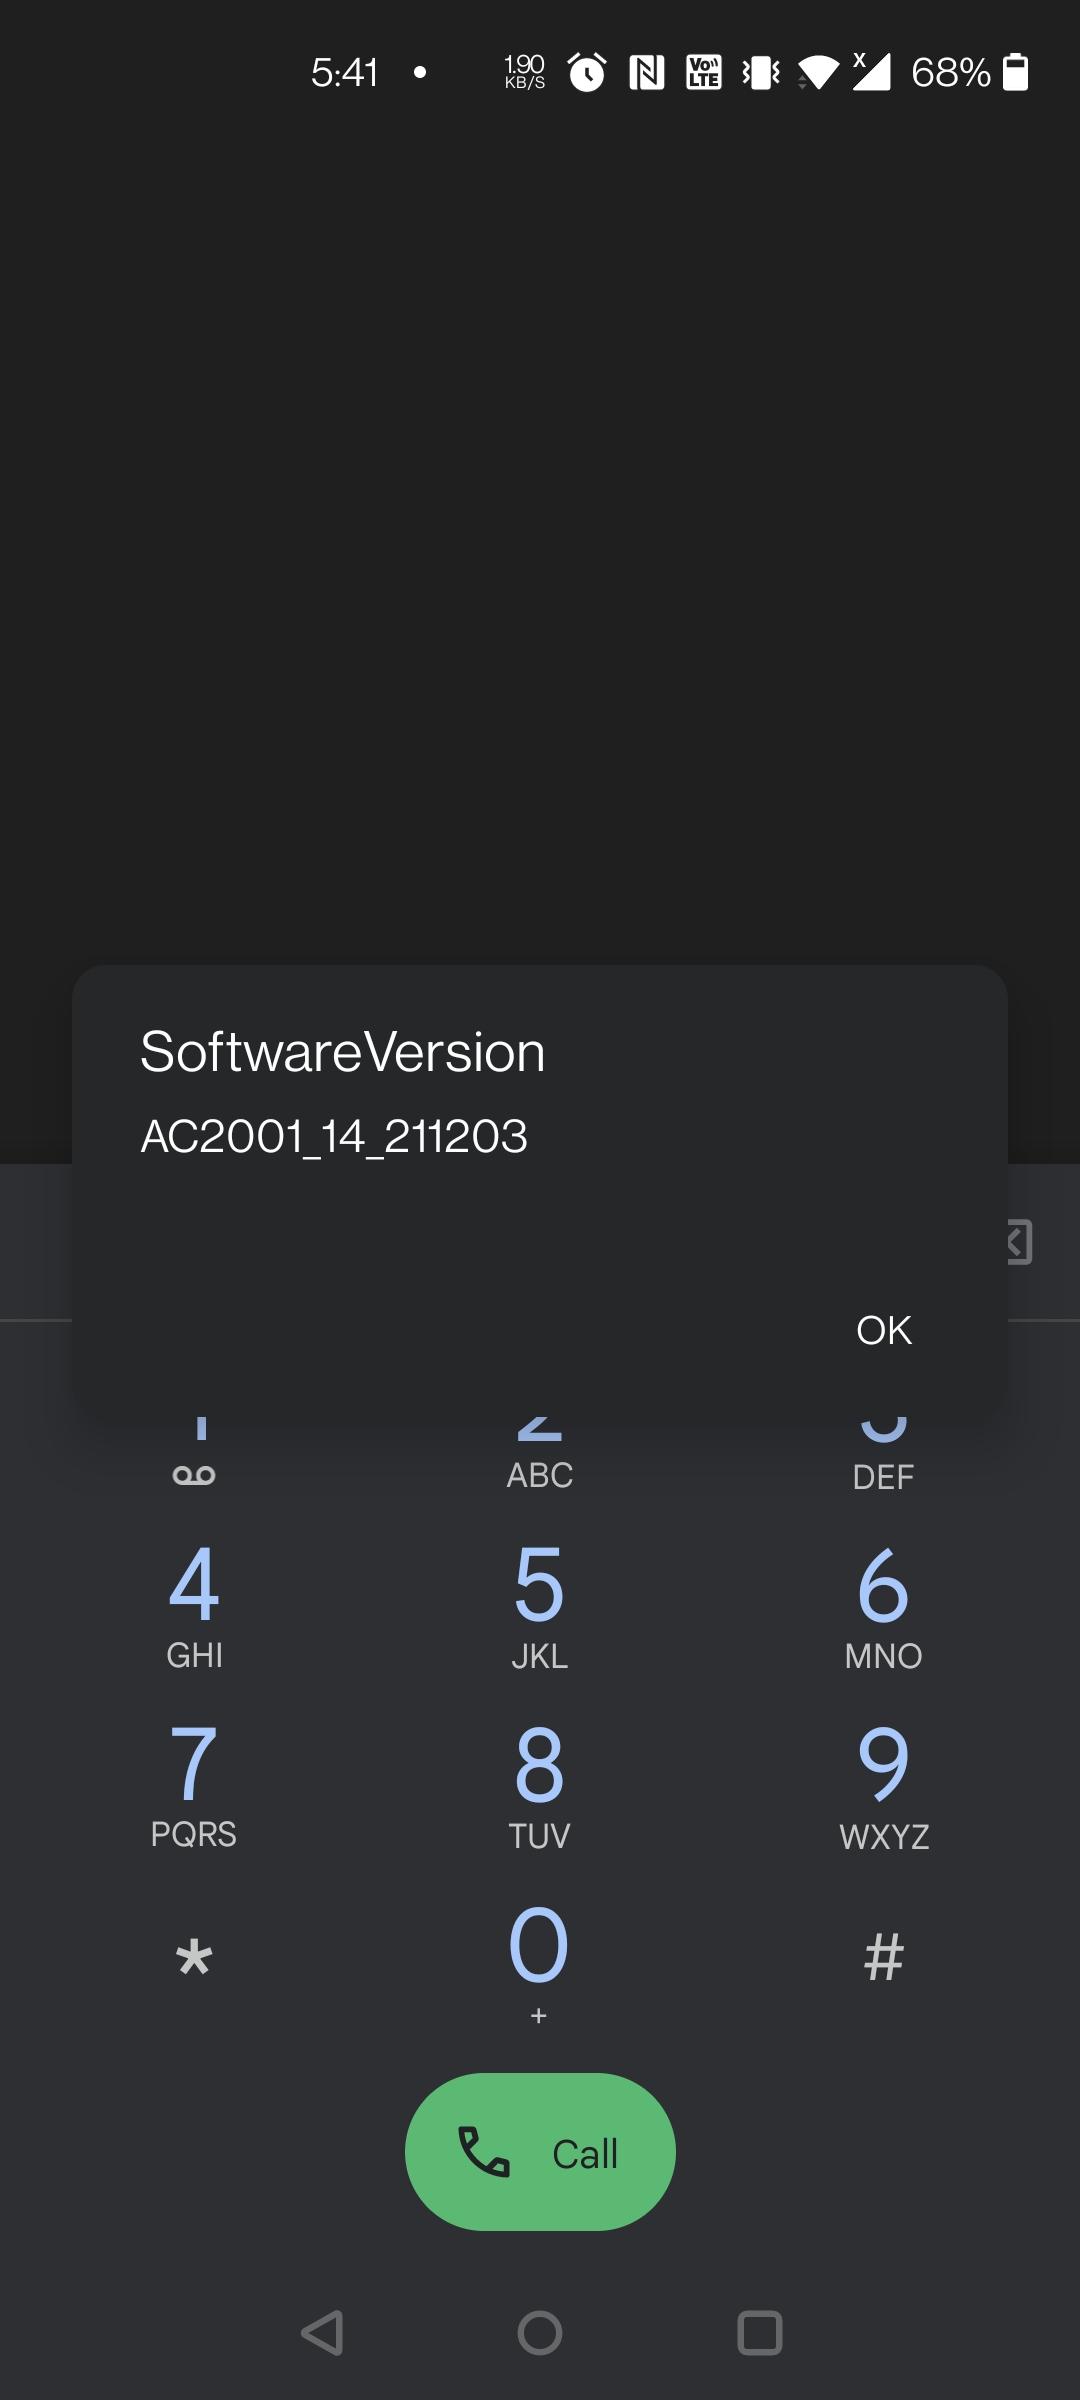 OnePlus software version. 90+ Hidden Android Secret Codes